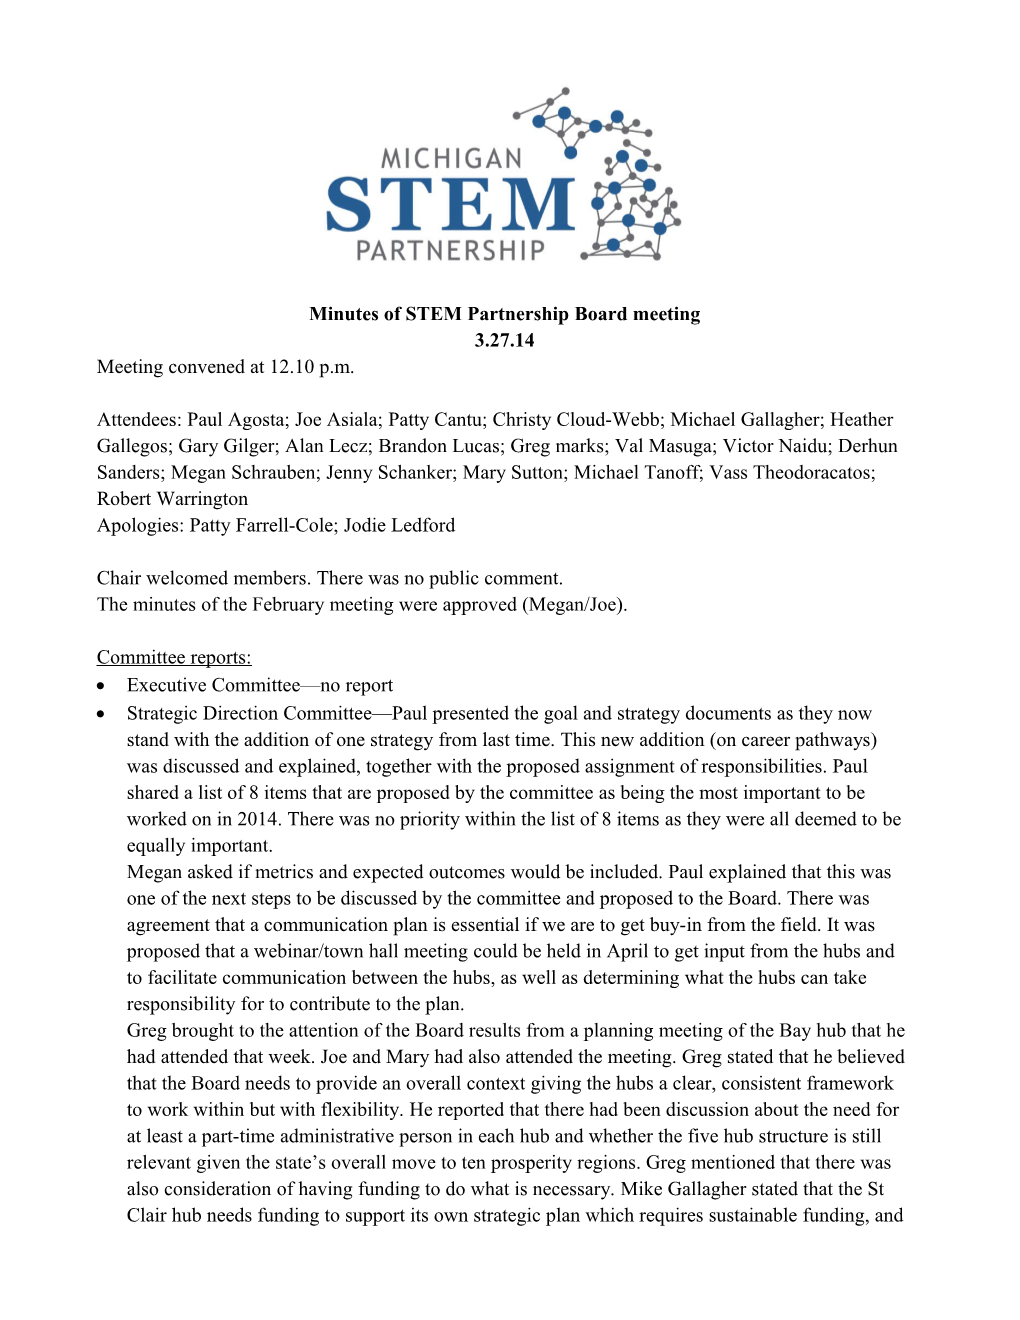 Minutes of STEM Partnership Board Meeting